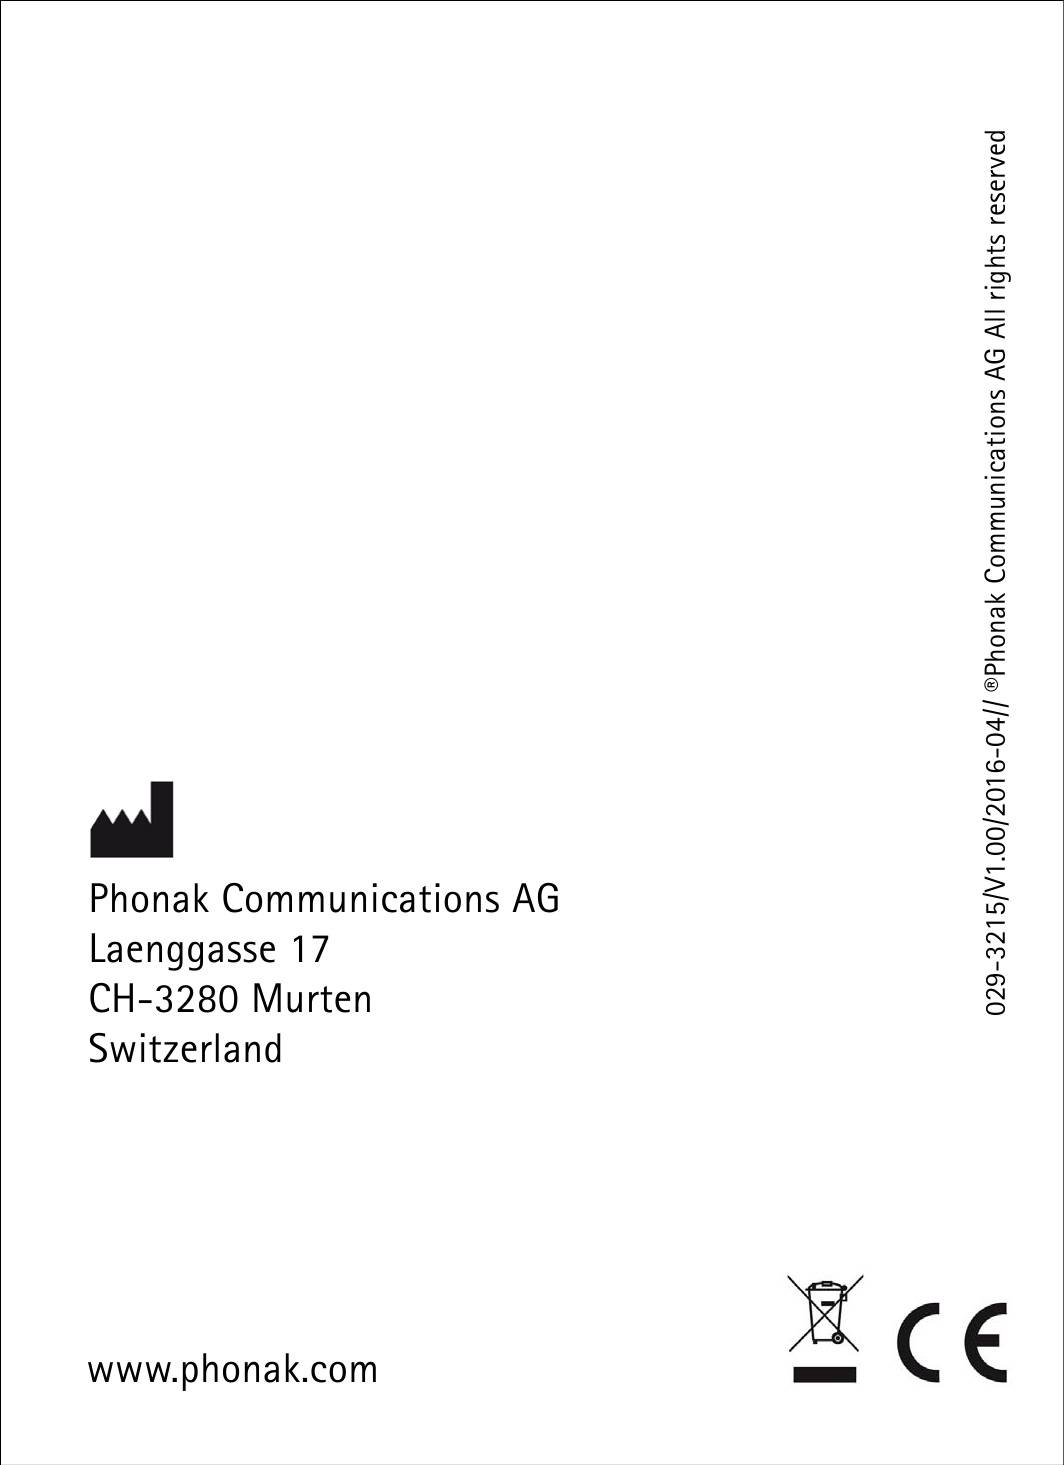 Phonak Communications AGLaenggasse 17CH-3280 MurtenSwitzerland029-3215/V1.00/2016-04// ®Phonak Communications AG All rights reservedwww.phonak.com